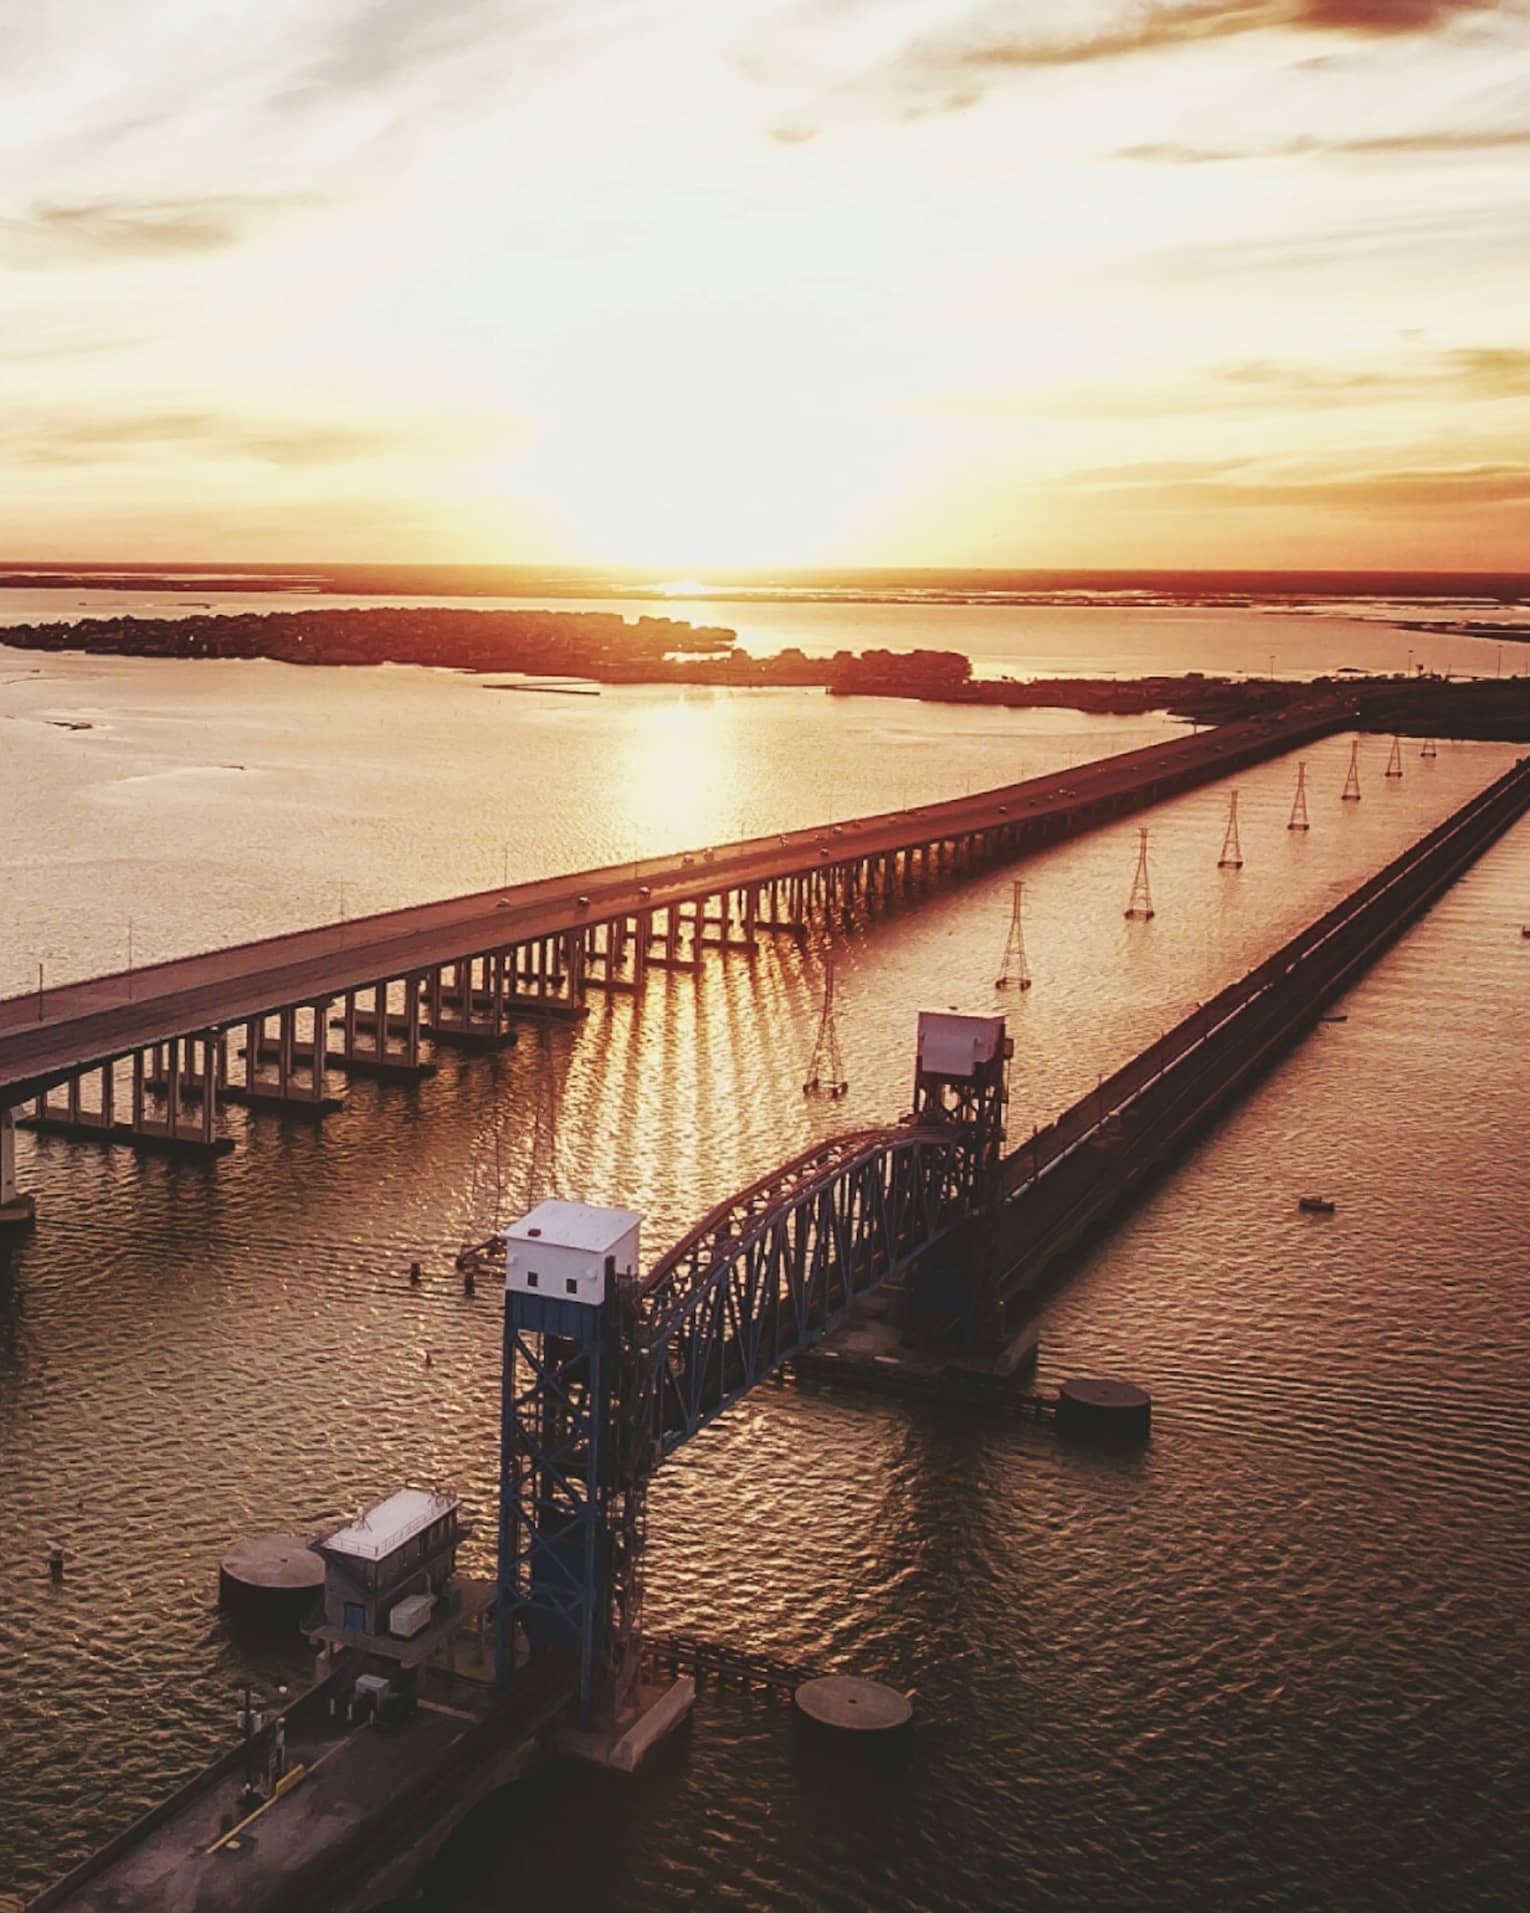 The sun sets over a long bridge in Houston